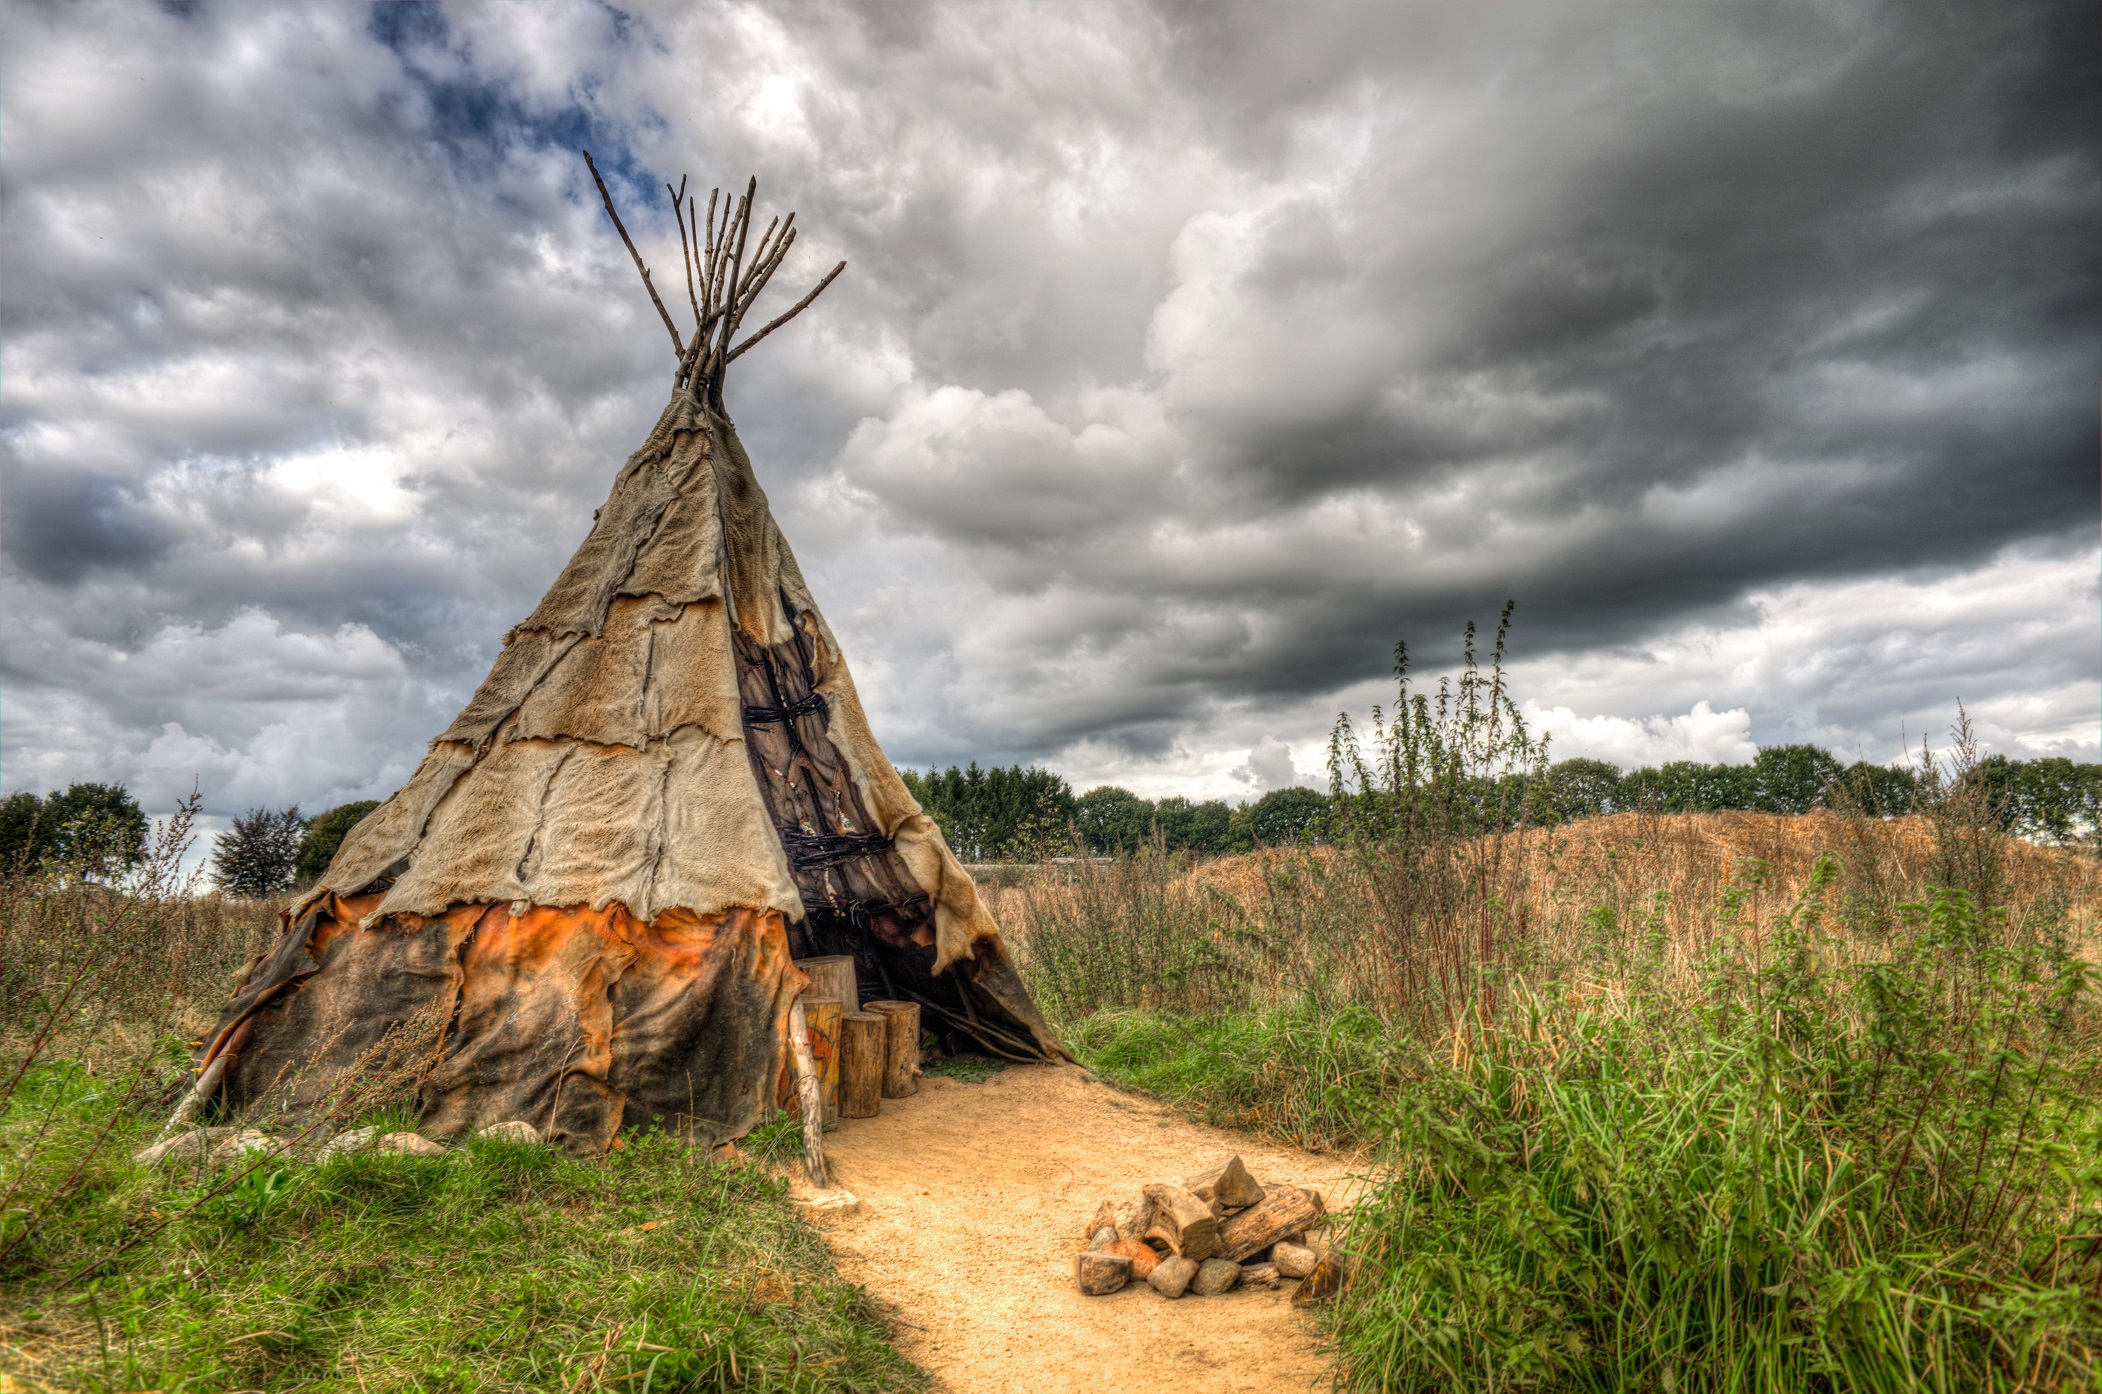 Cloud Hdr Native American Tent Tipi 2102x1394